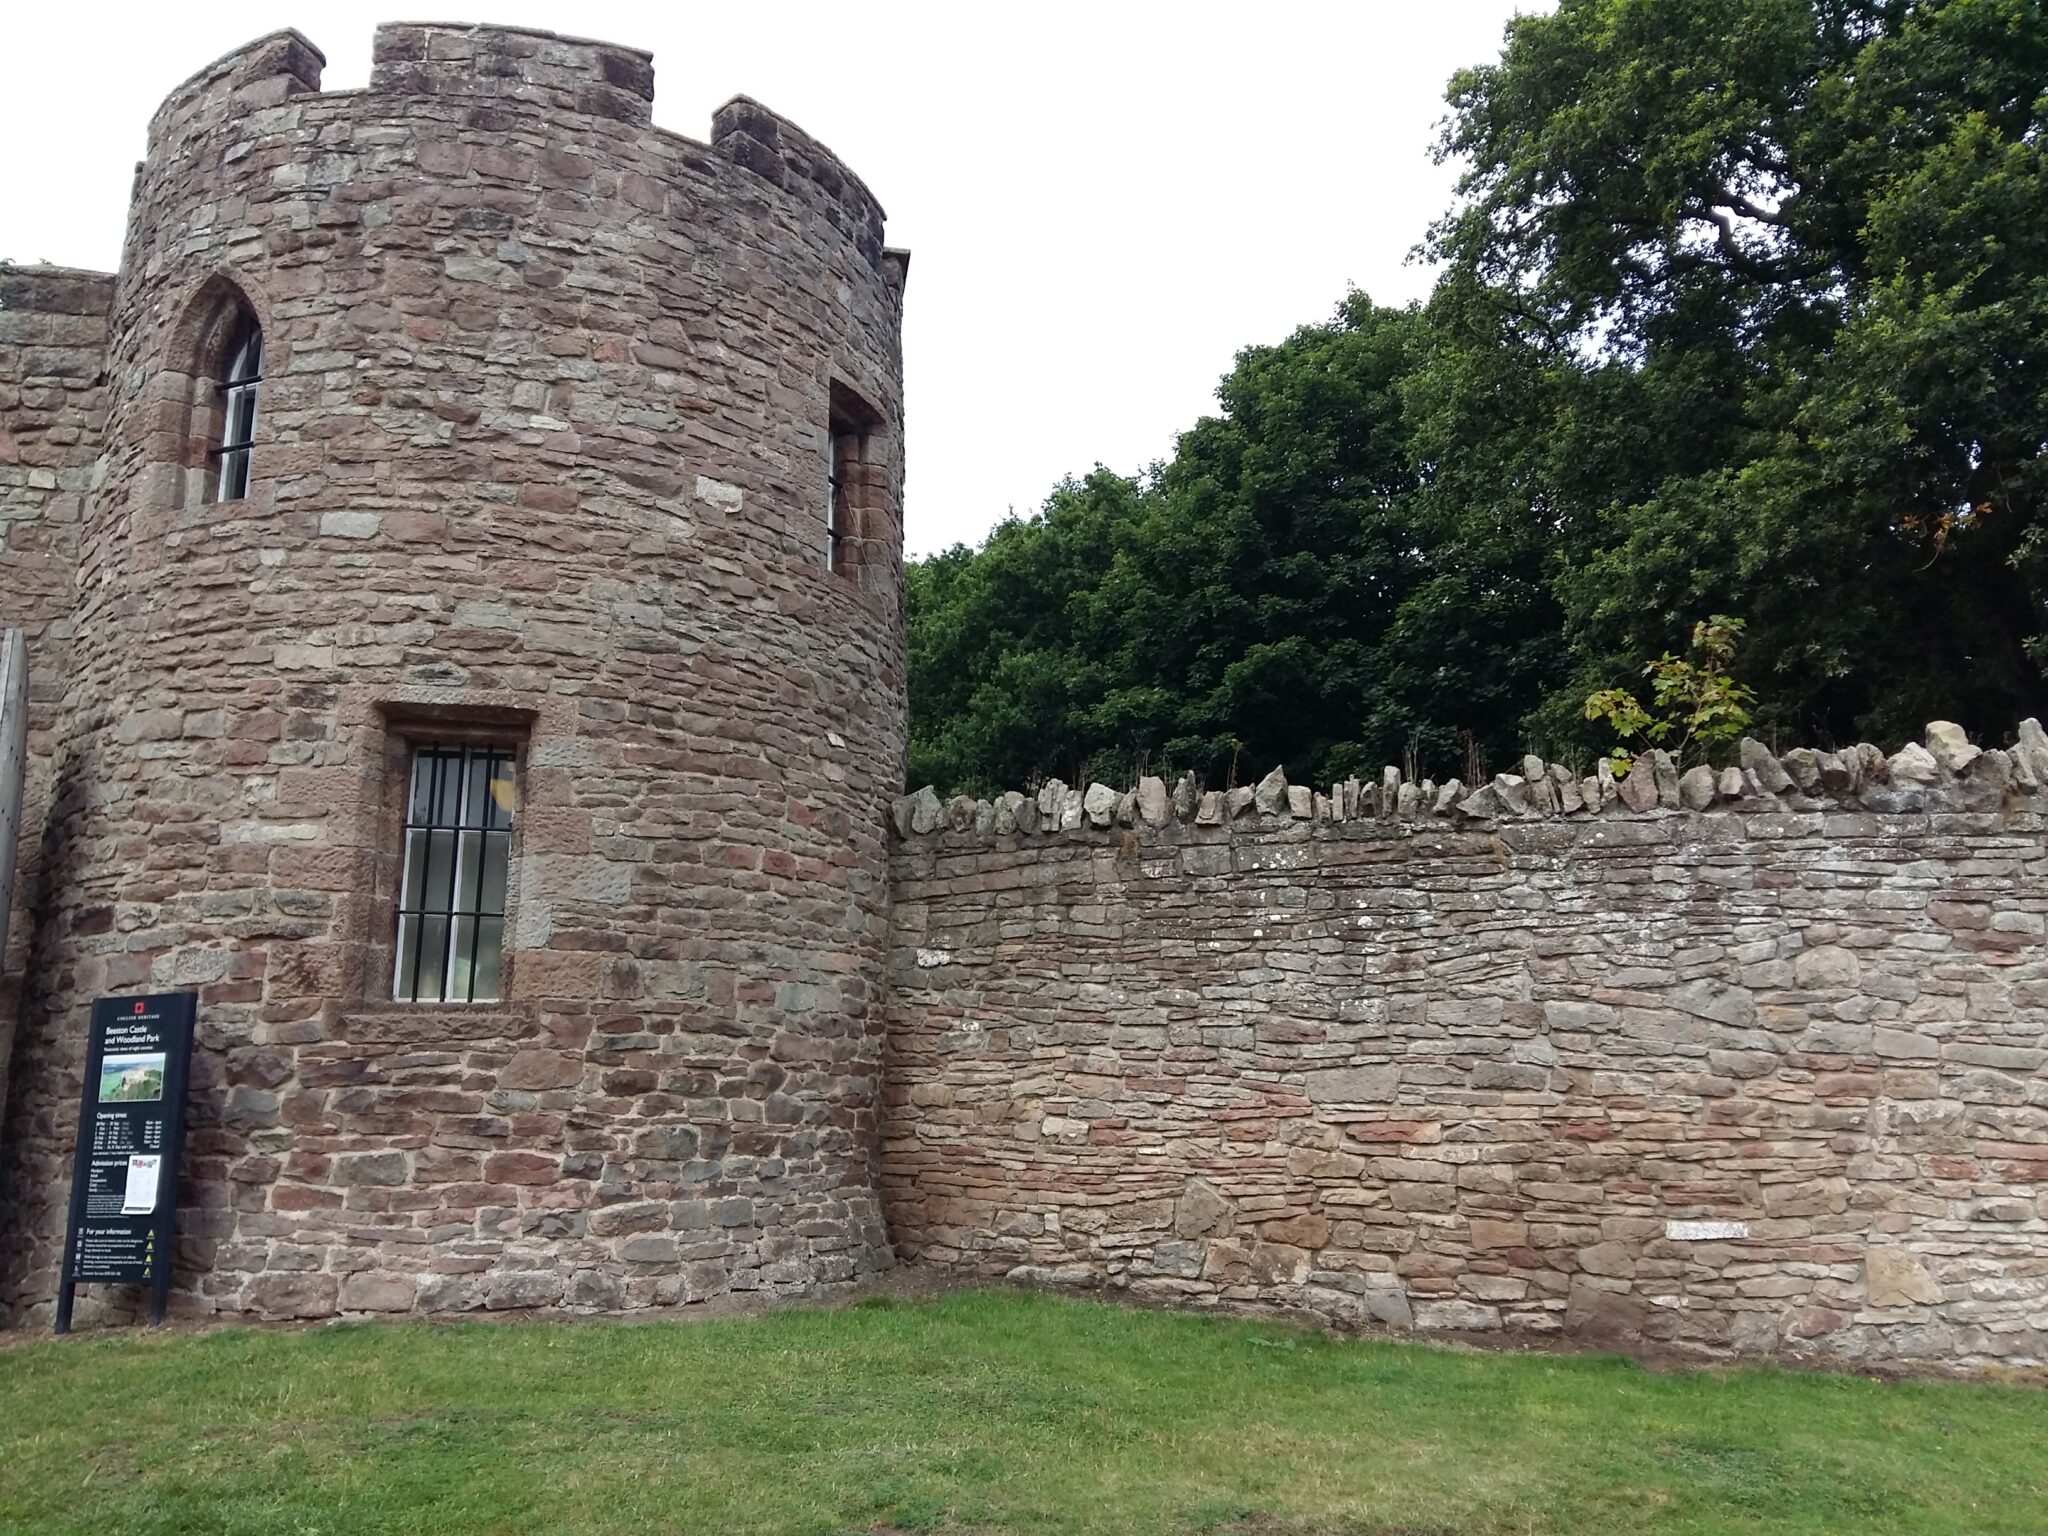 Entrance to Beeston Castle